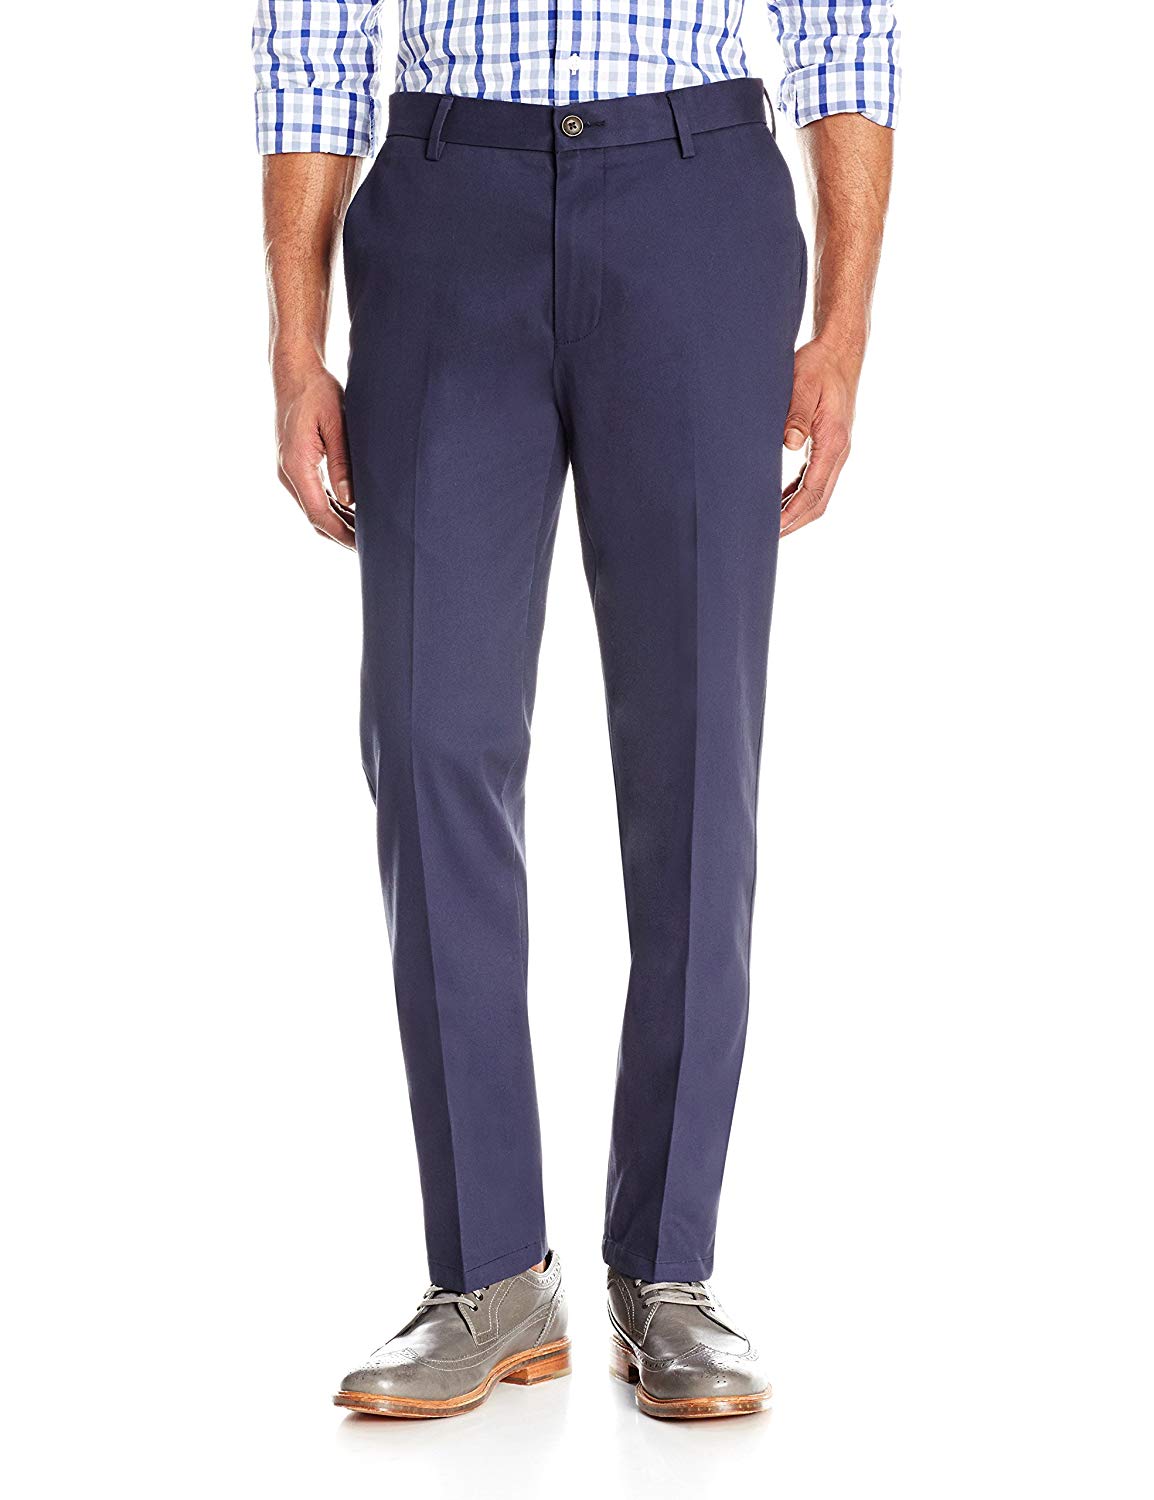 Size 33W x 32L Goodthreads Men/'s Slim-Fit Wrinkle-Free Dress Chino Pant, Navy